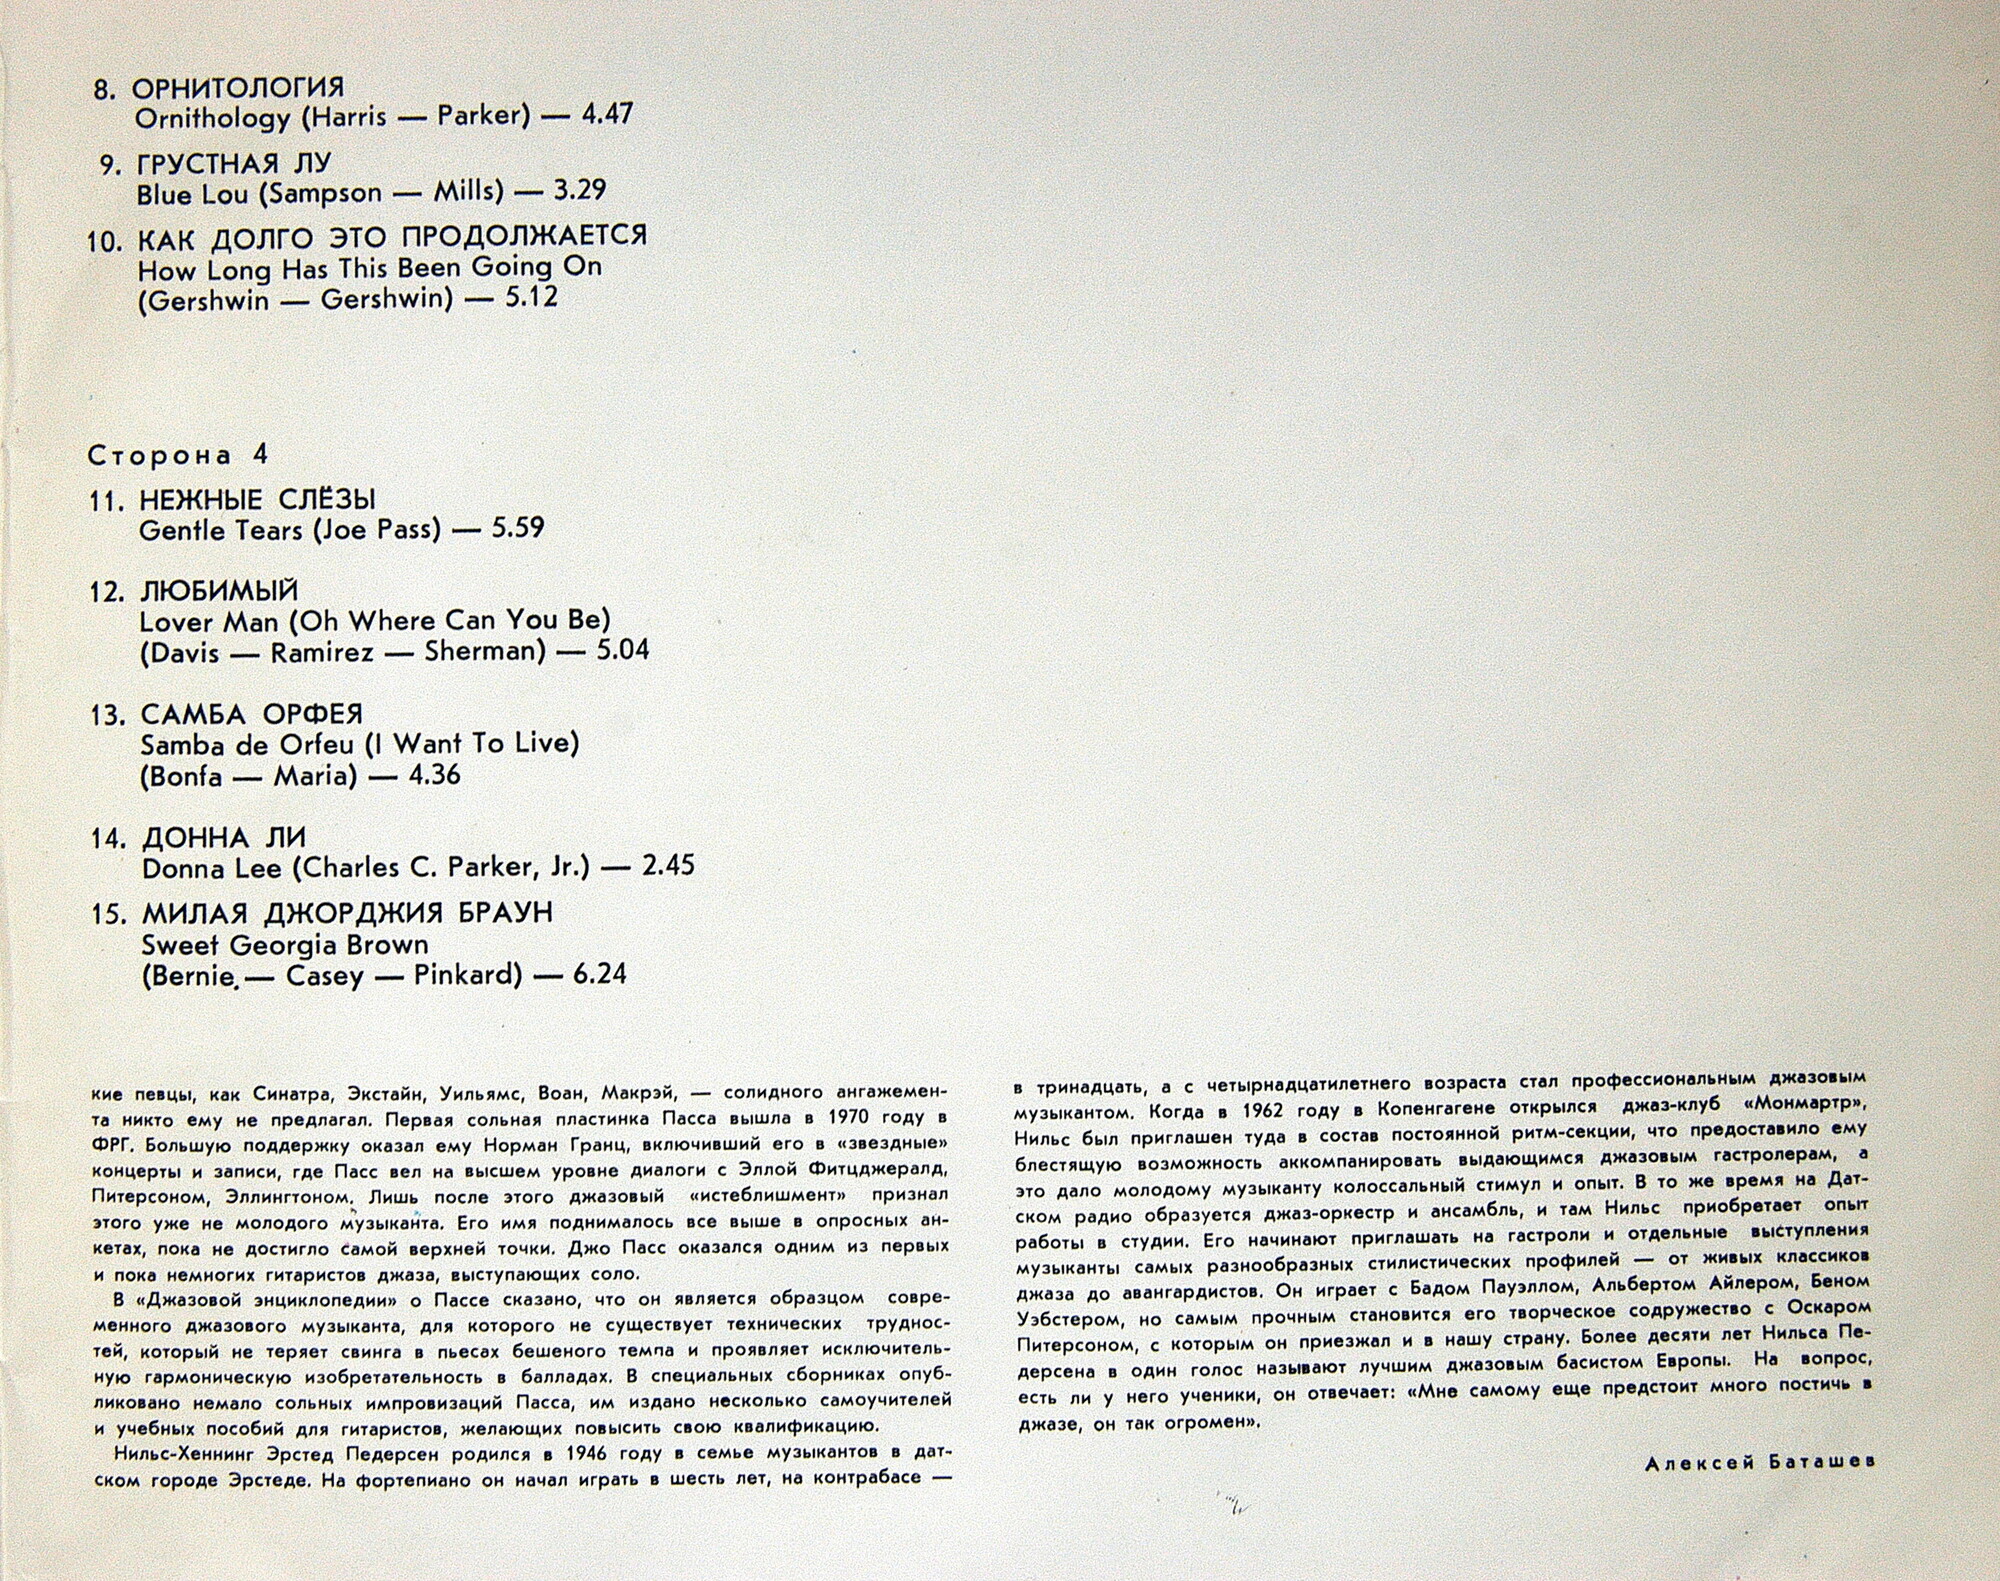 ТРИО ОСКАРА ПИТЕРСОНА (О. Питерсон, фп., Д. Пасс, гитара, Н. Педерсон, контрабас). Концерт в Париже 5 октября 1978 г.